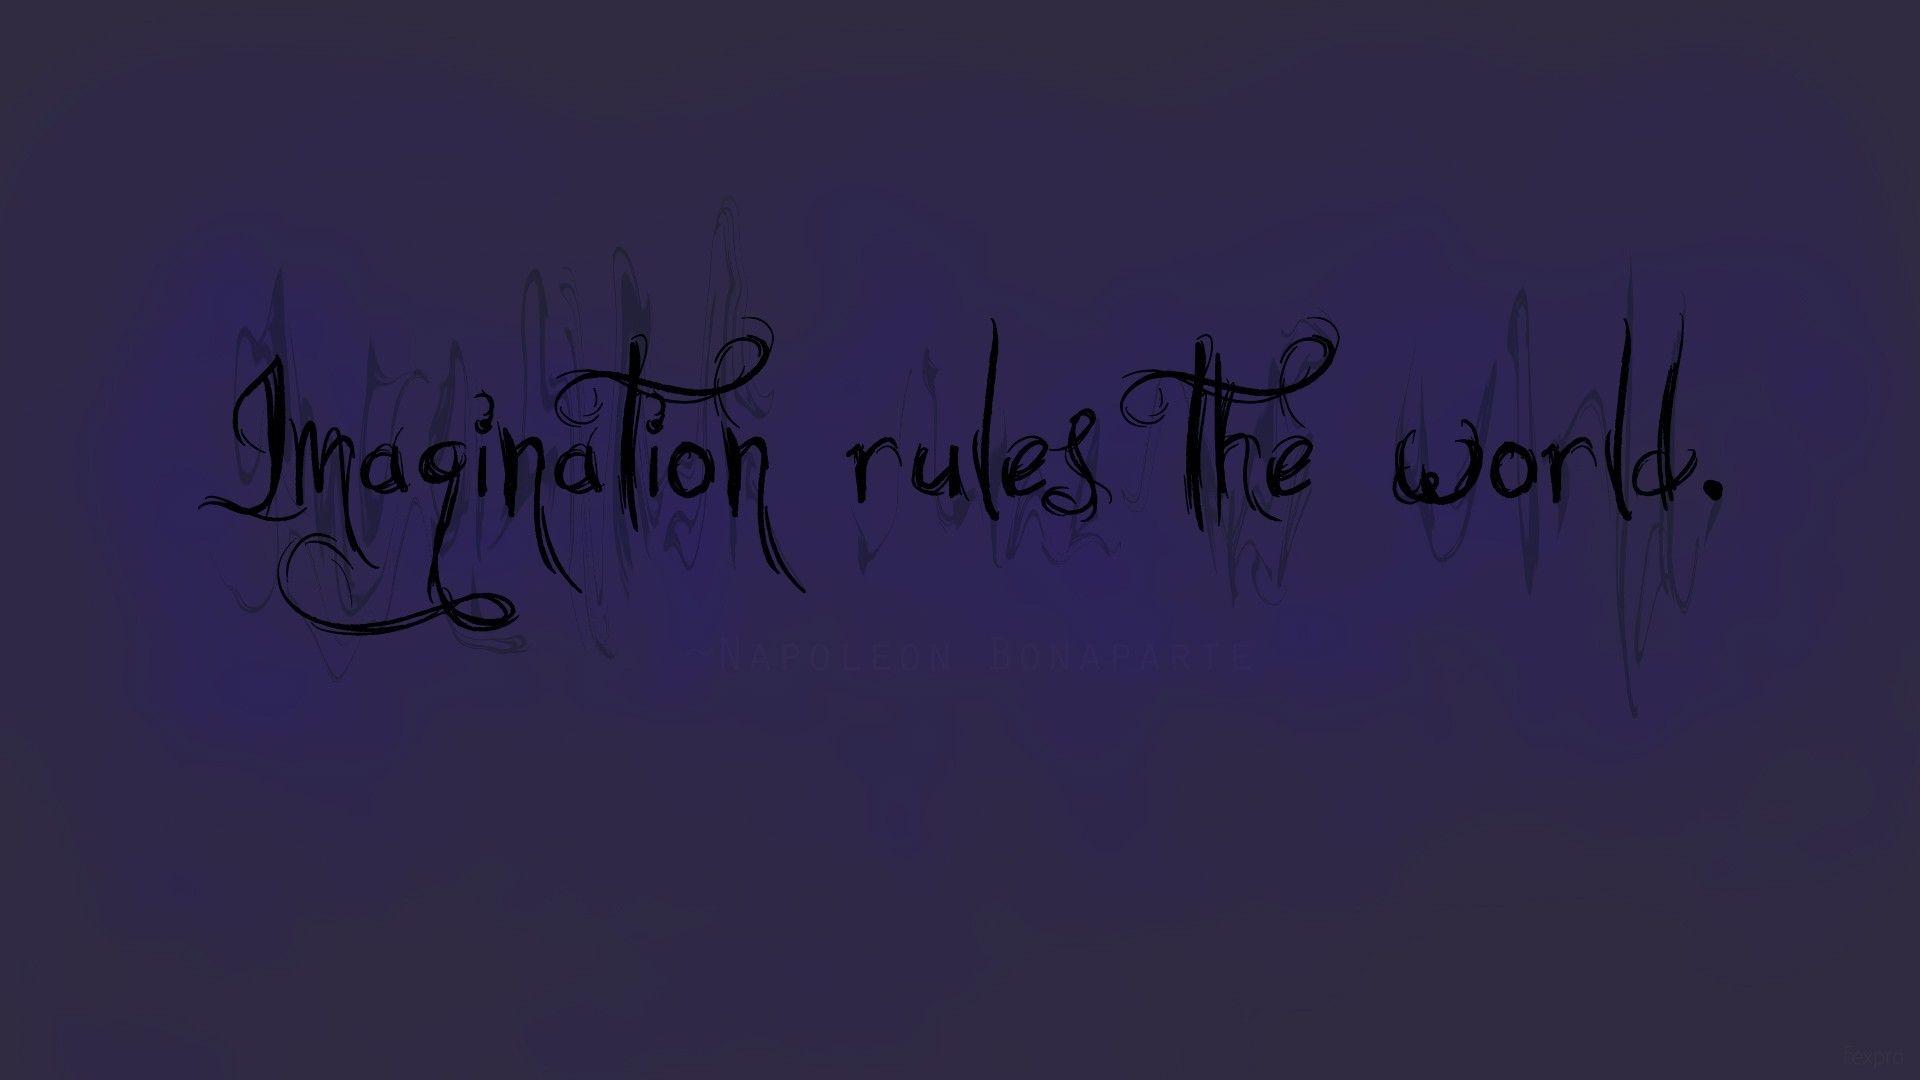 Rules world imagination wallpaper. PC